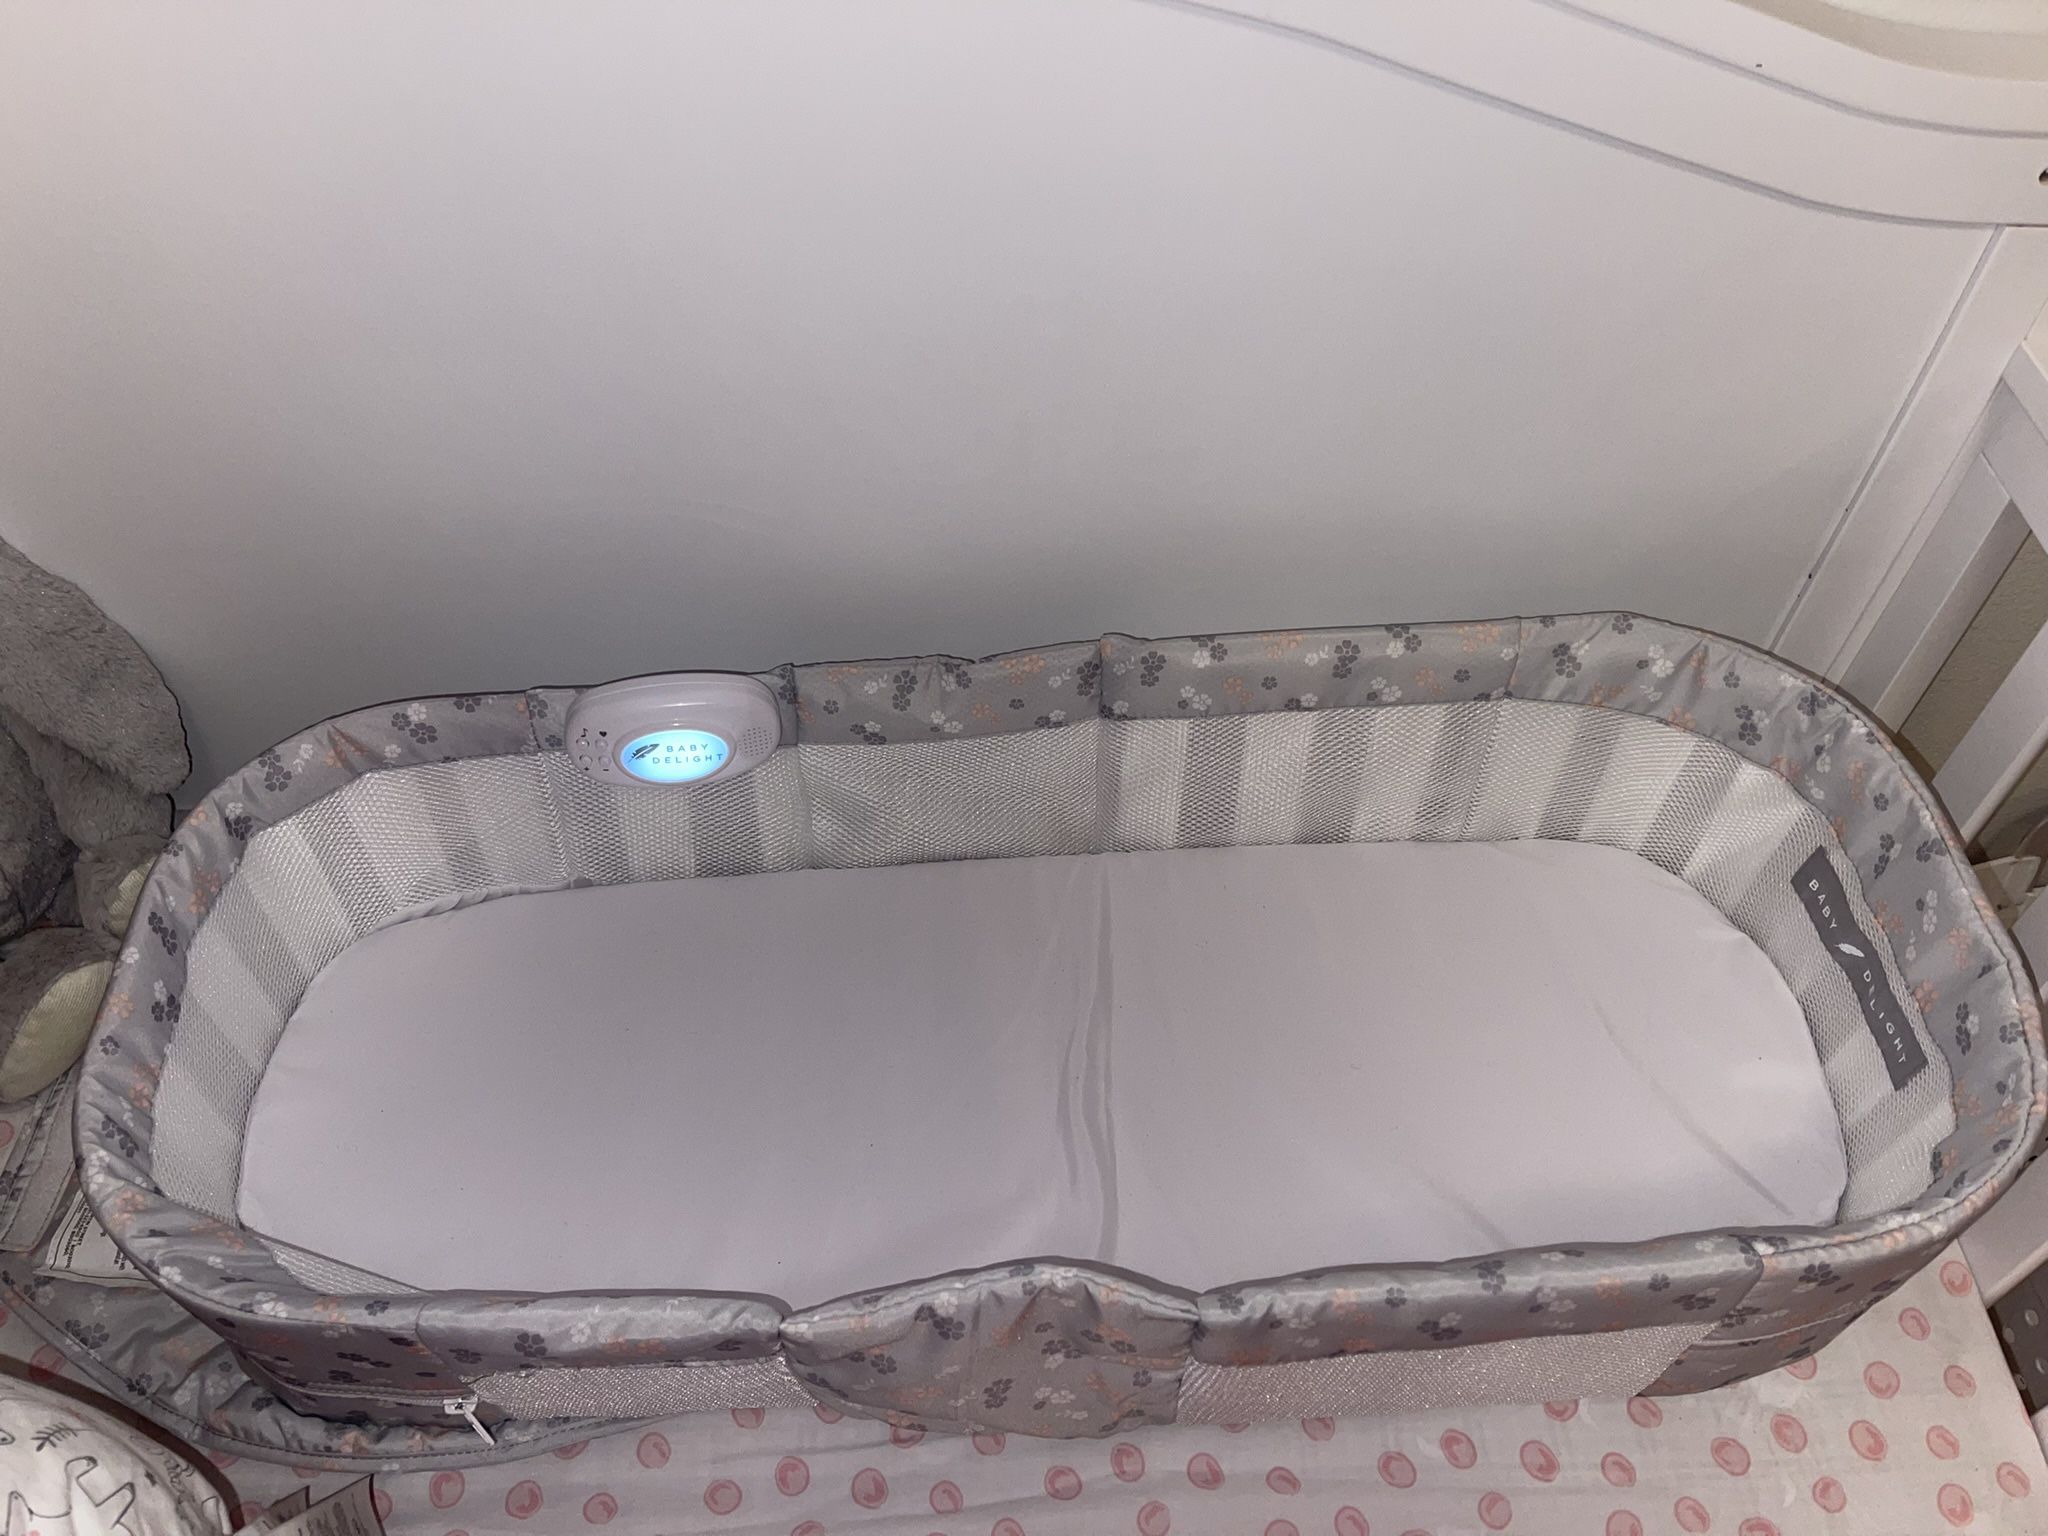 Snuggle Nest Portable Lounger / Co-Sleeper